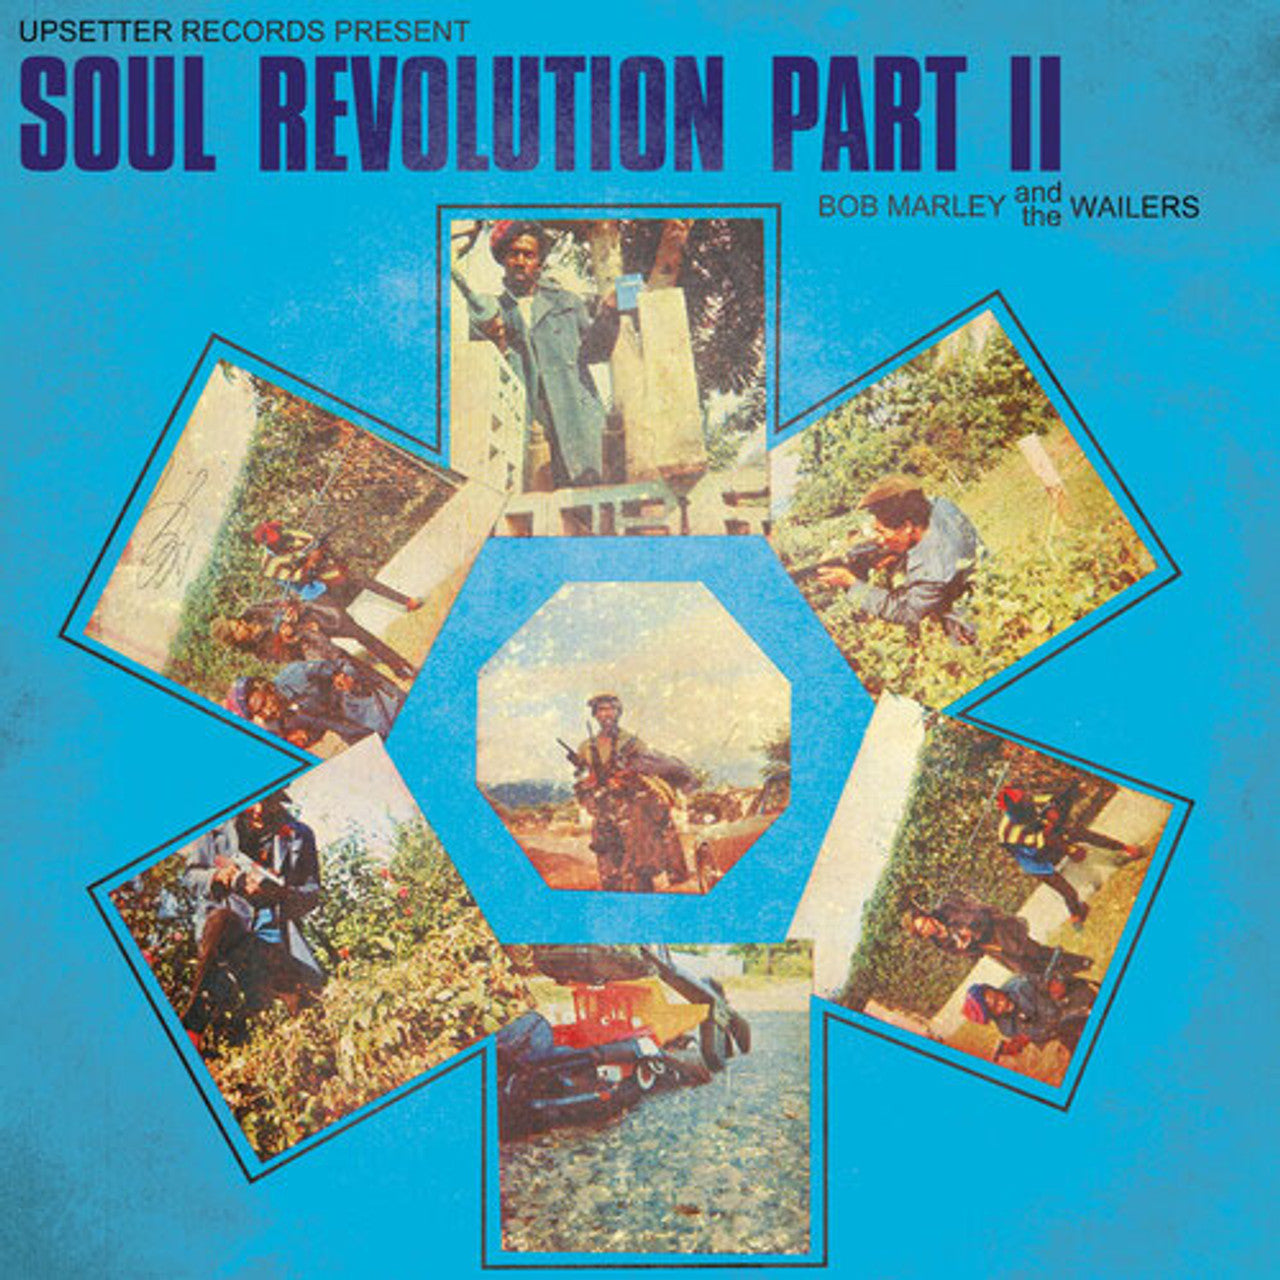 BOB MARLEY & THE WAILERS – Soul Revolution Part II LP (red vinyl)